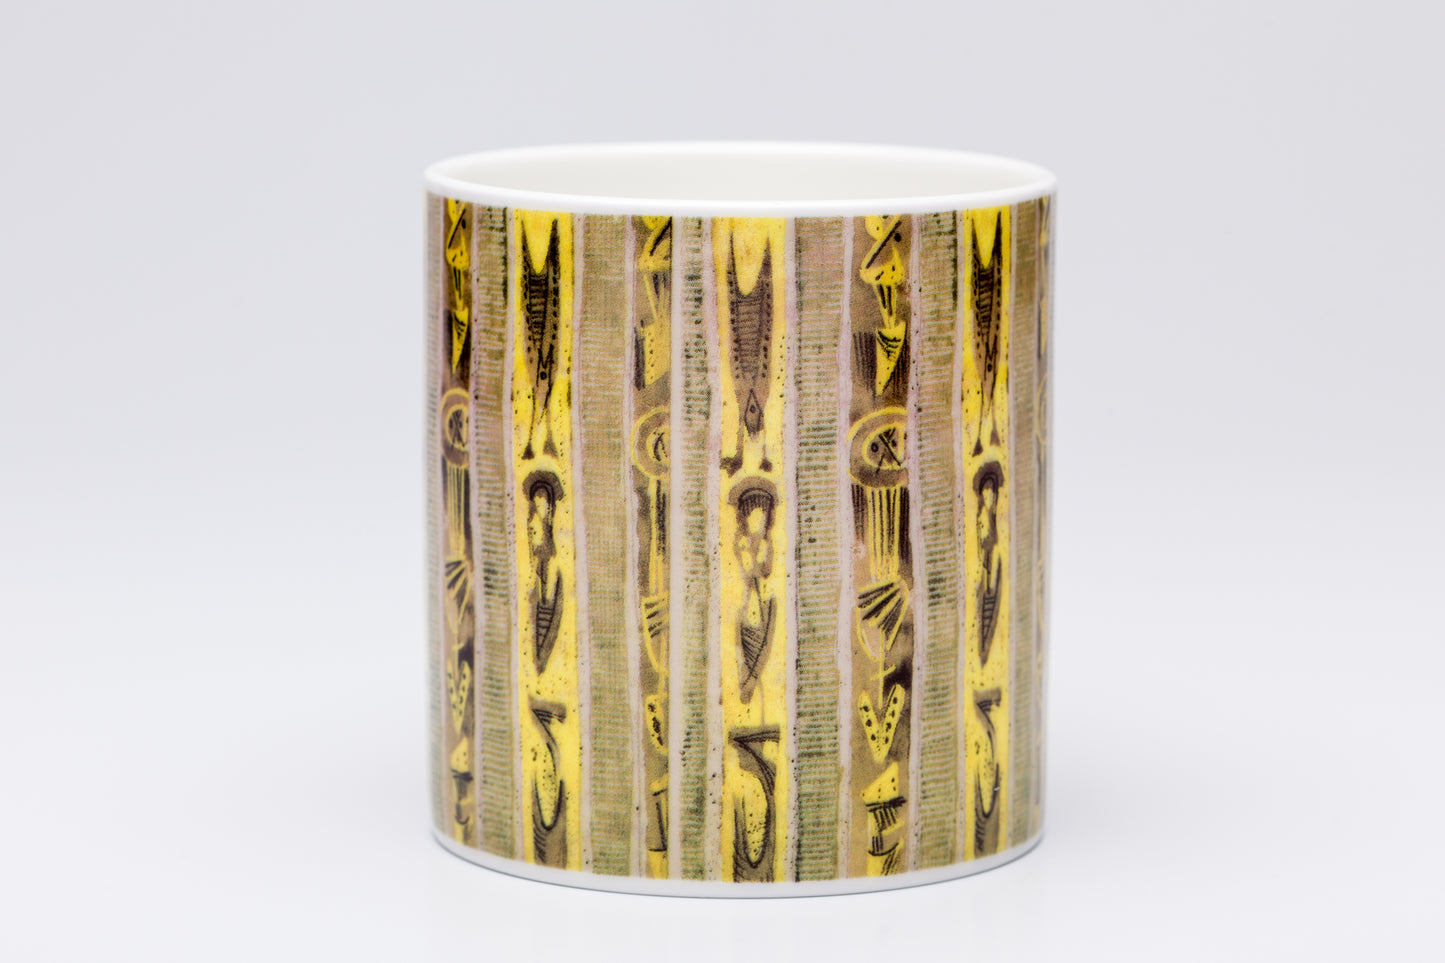 Textile Design mug